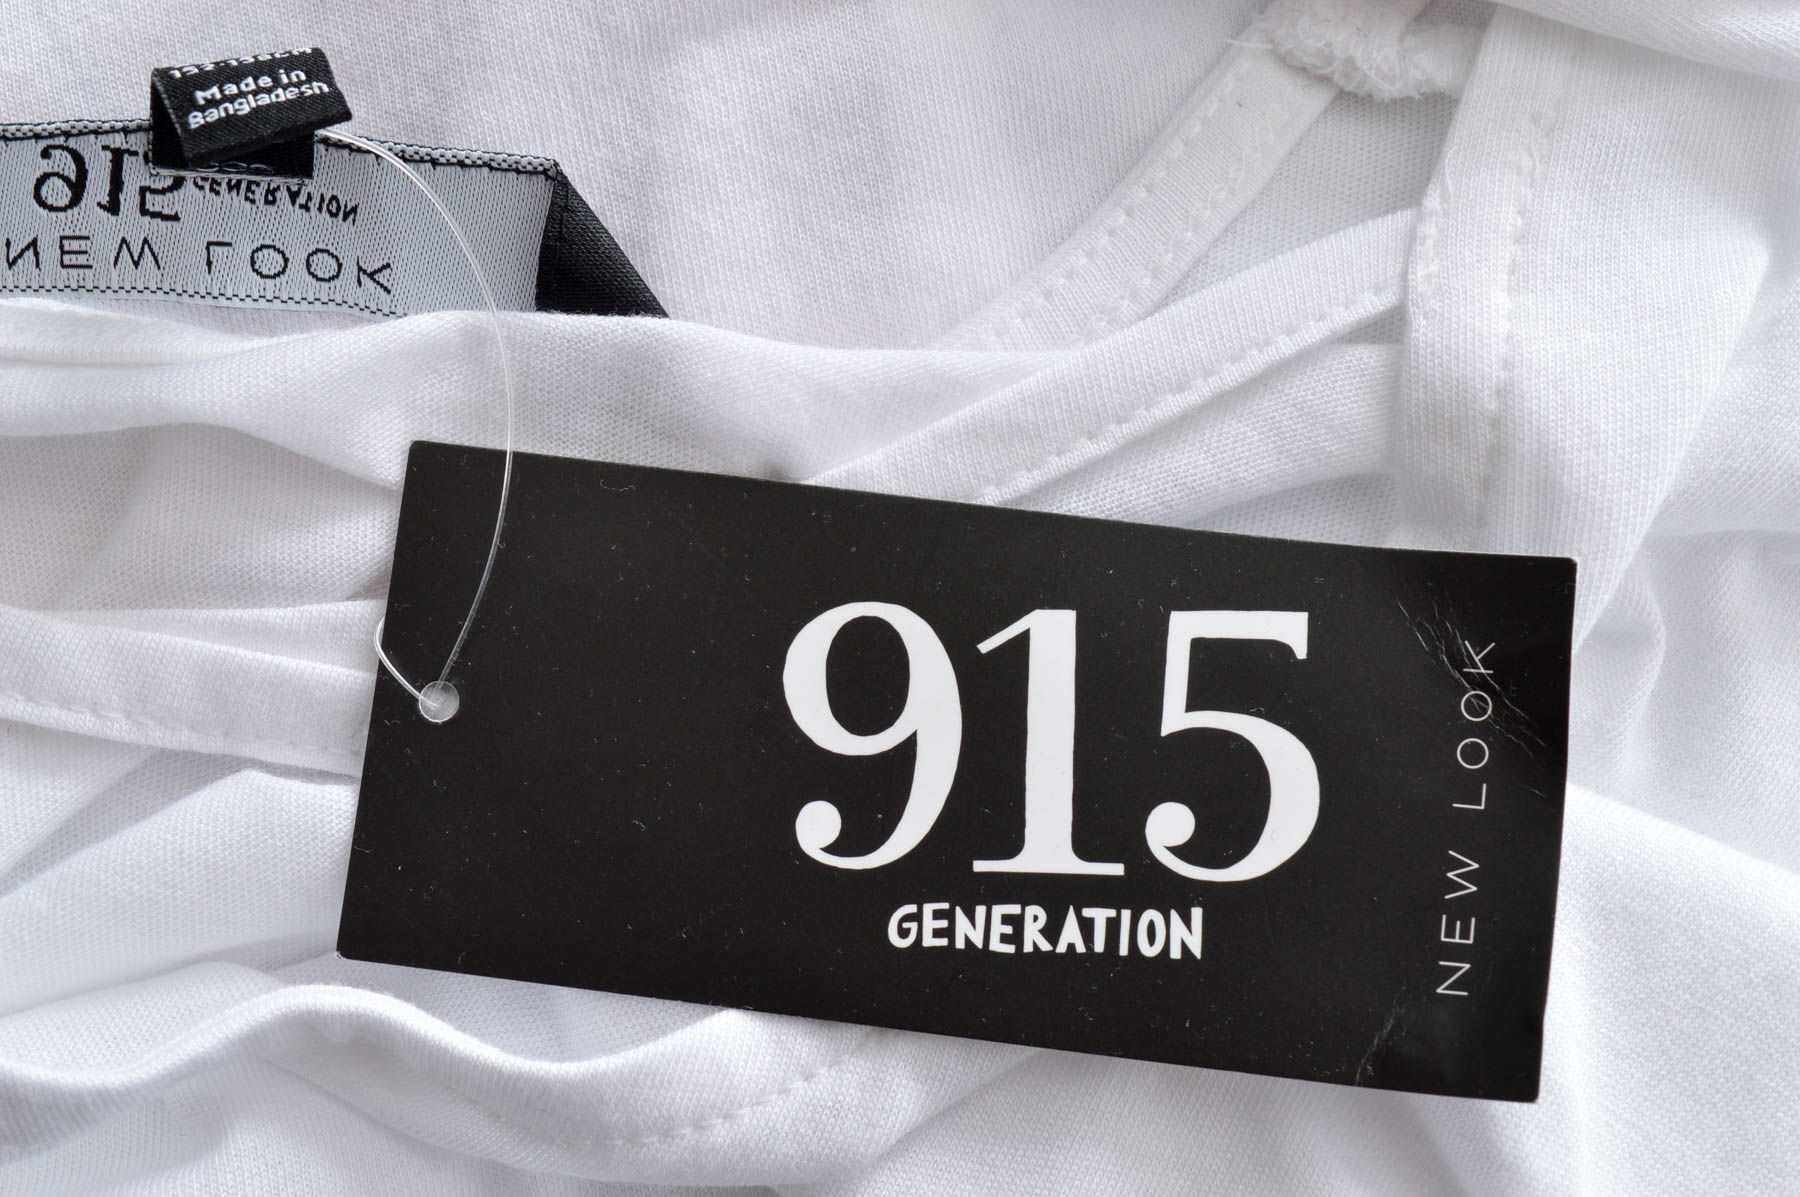 Girls' t-shirt - New Look 915 Generation - 2